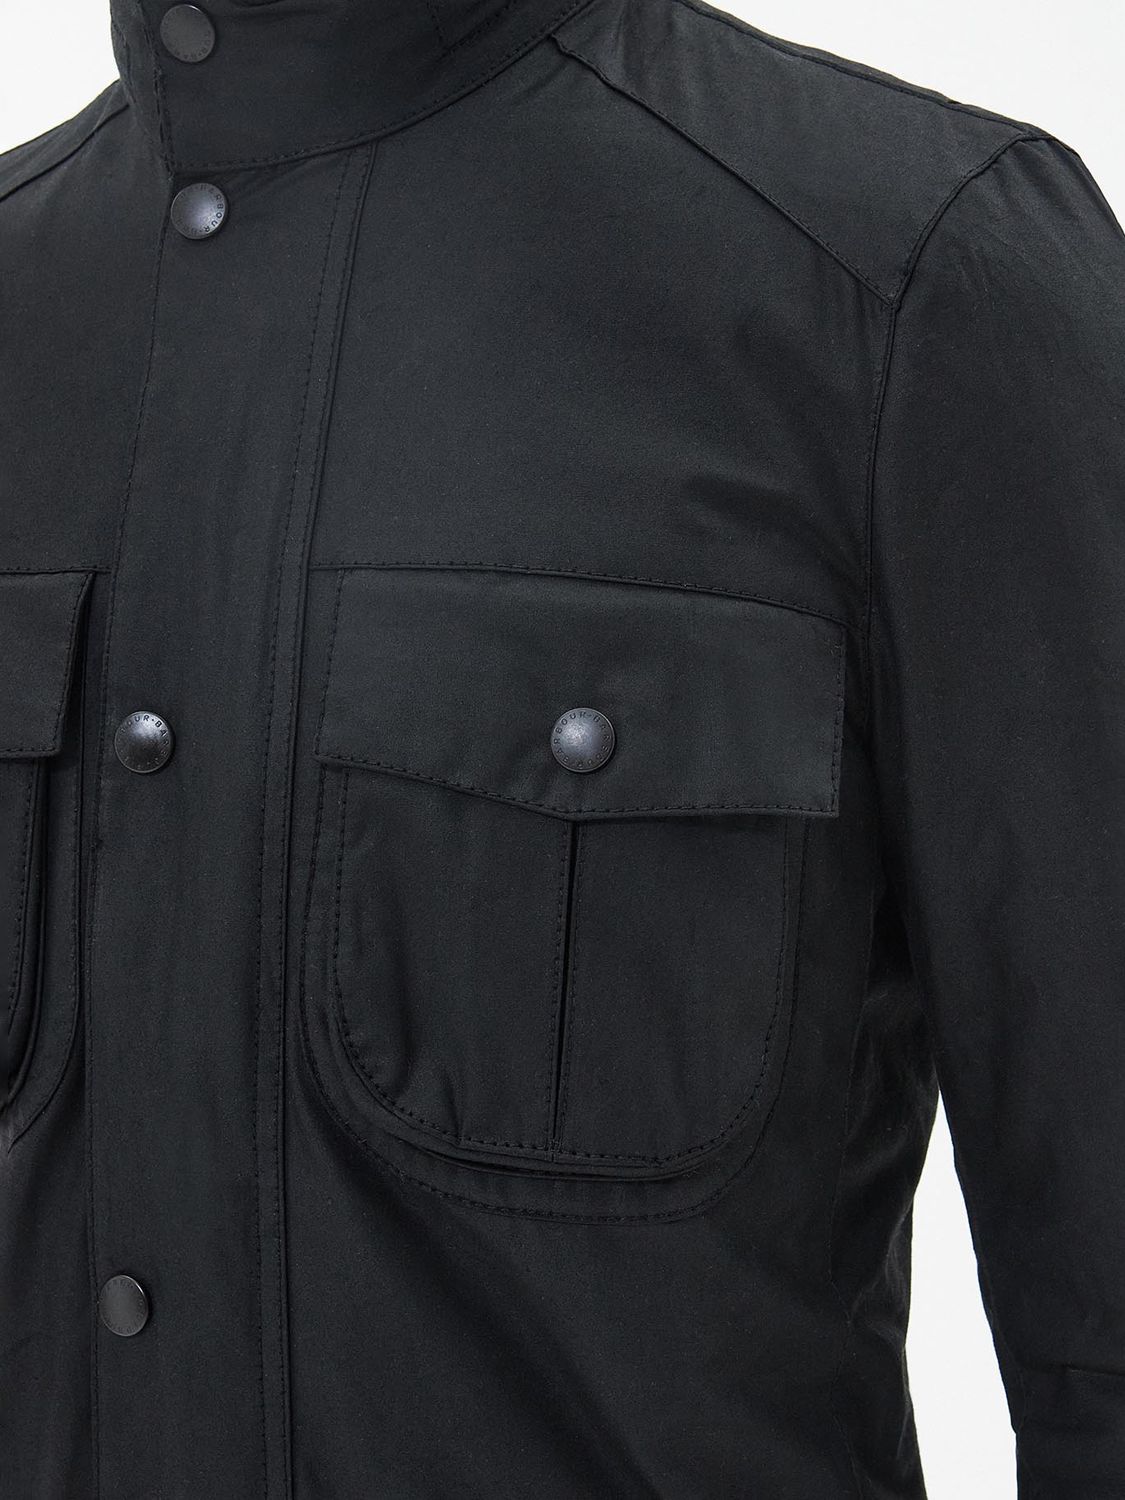 Barbour Corbridge Rugged Utility Style Waxed Jacket, Black, XL